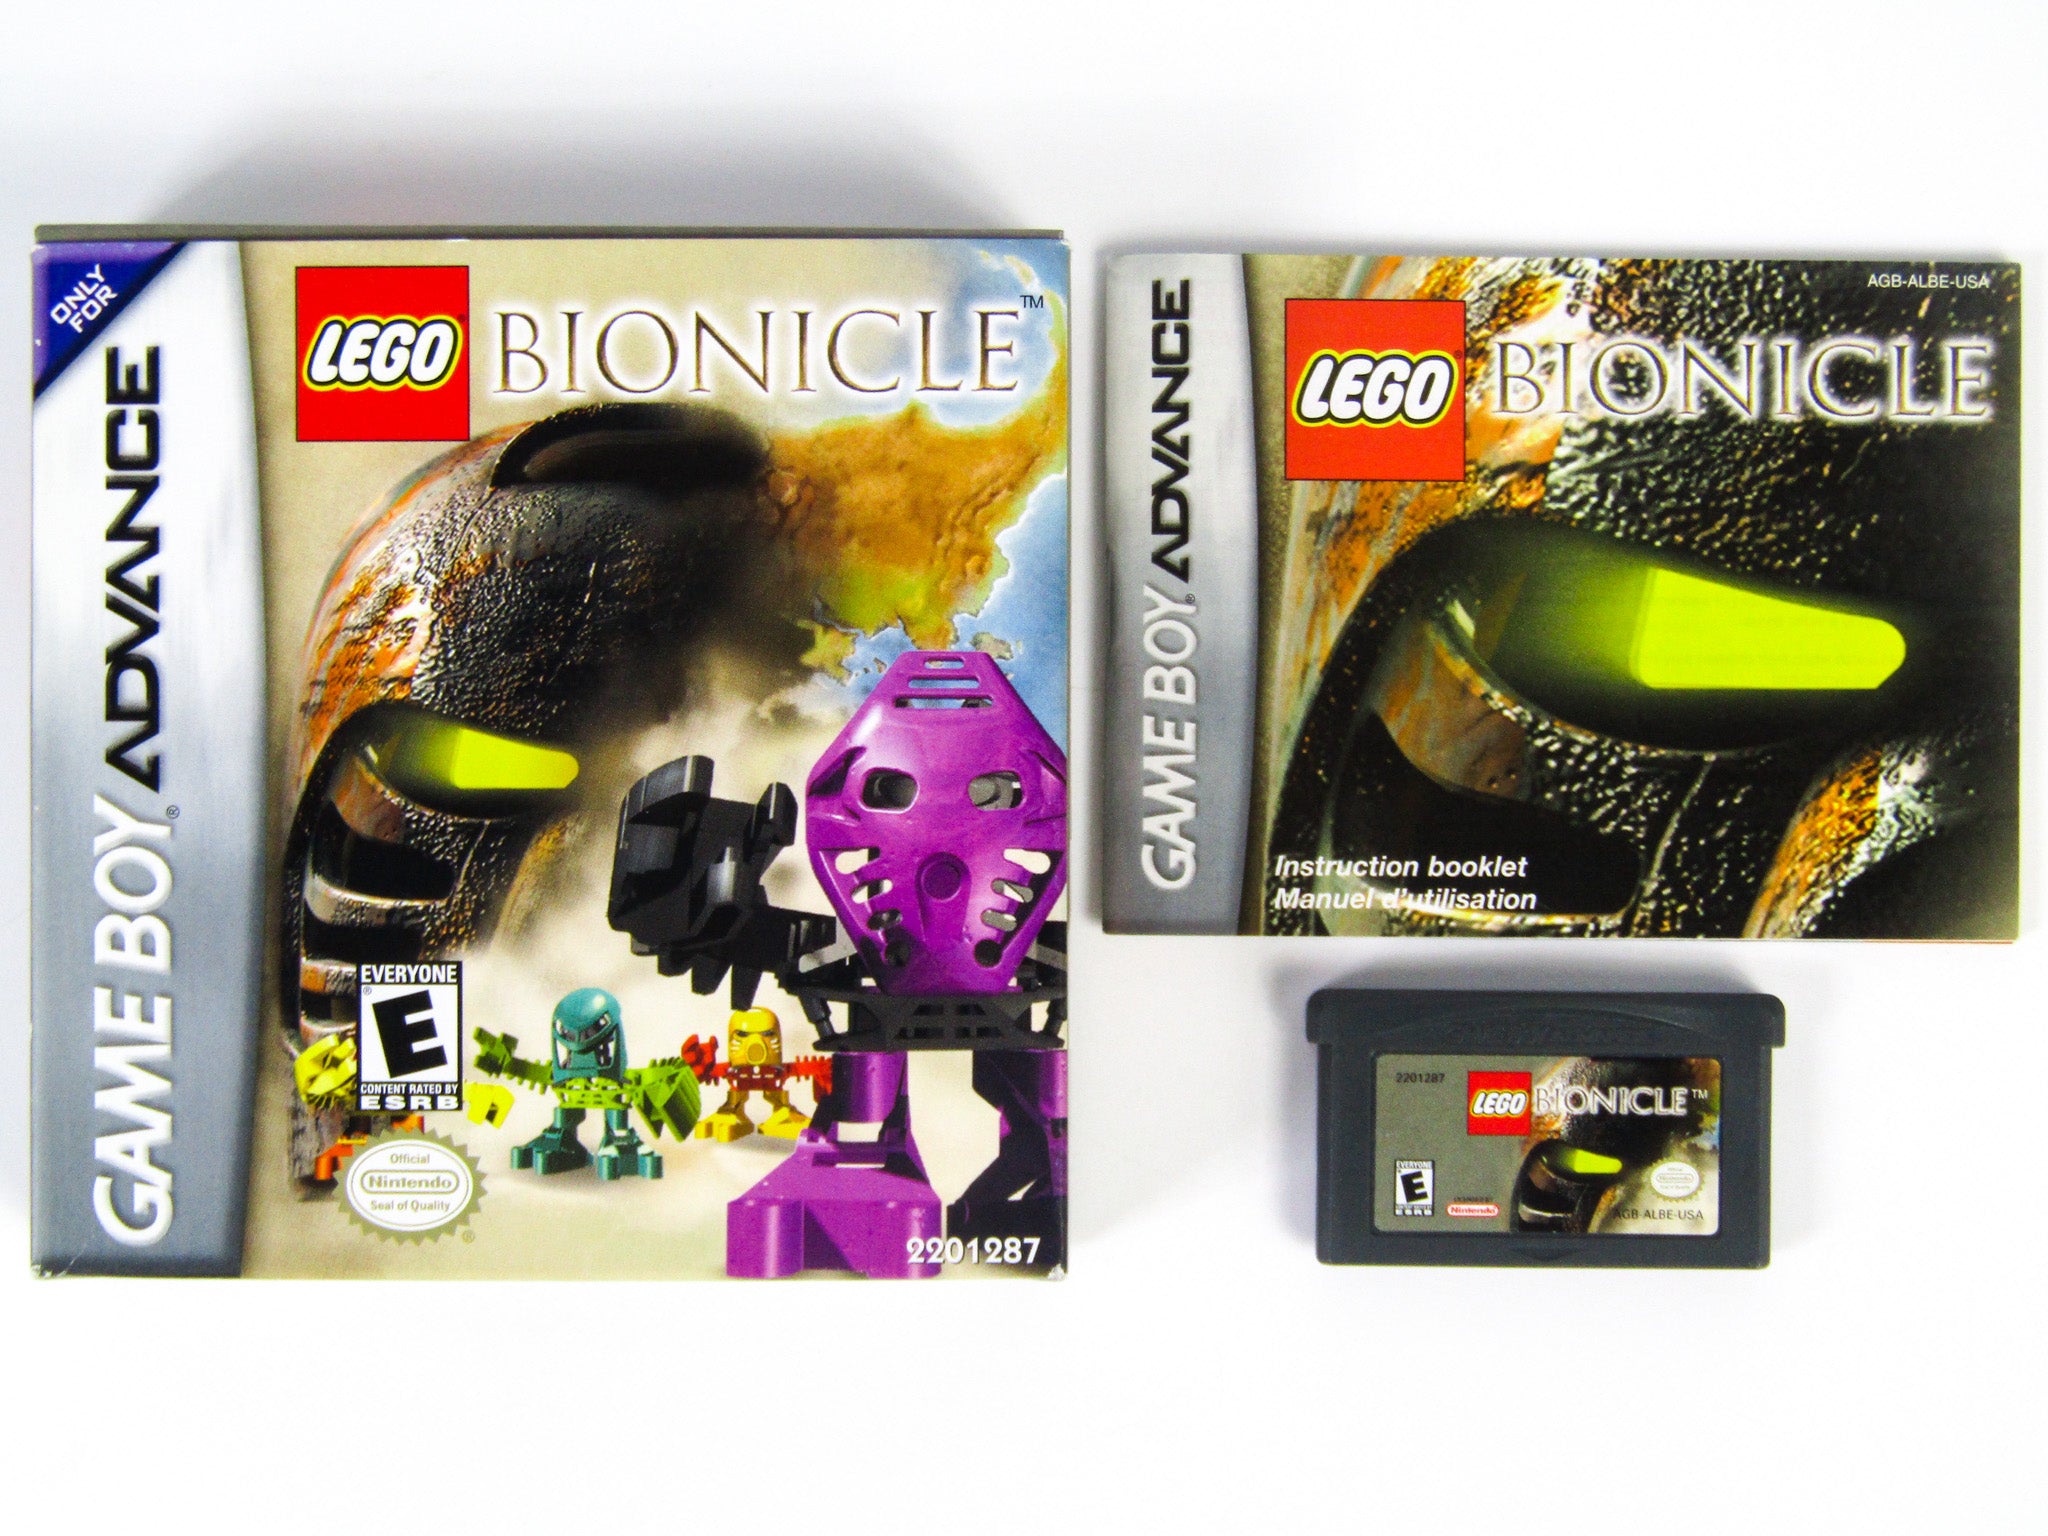 Lego Bionicle GameBoy Advance